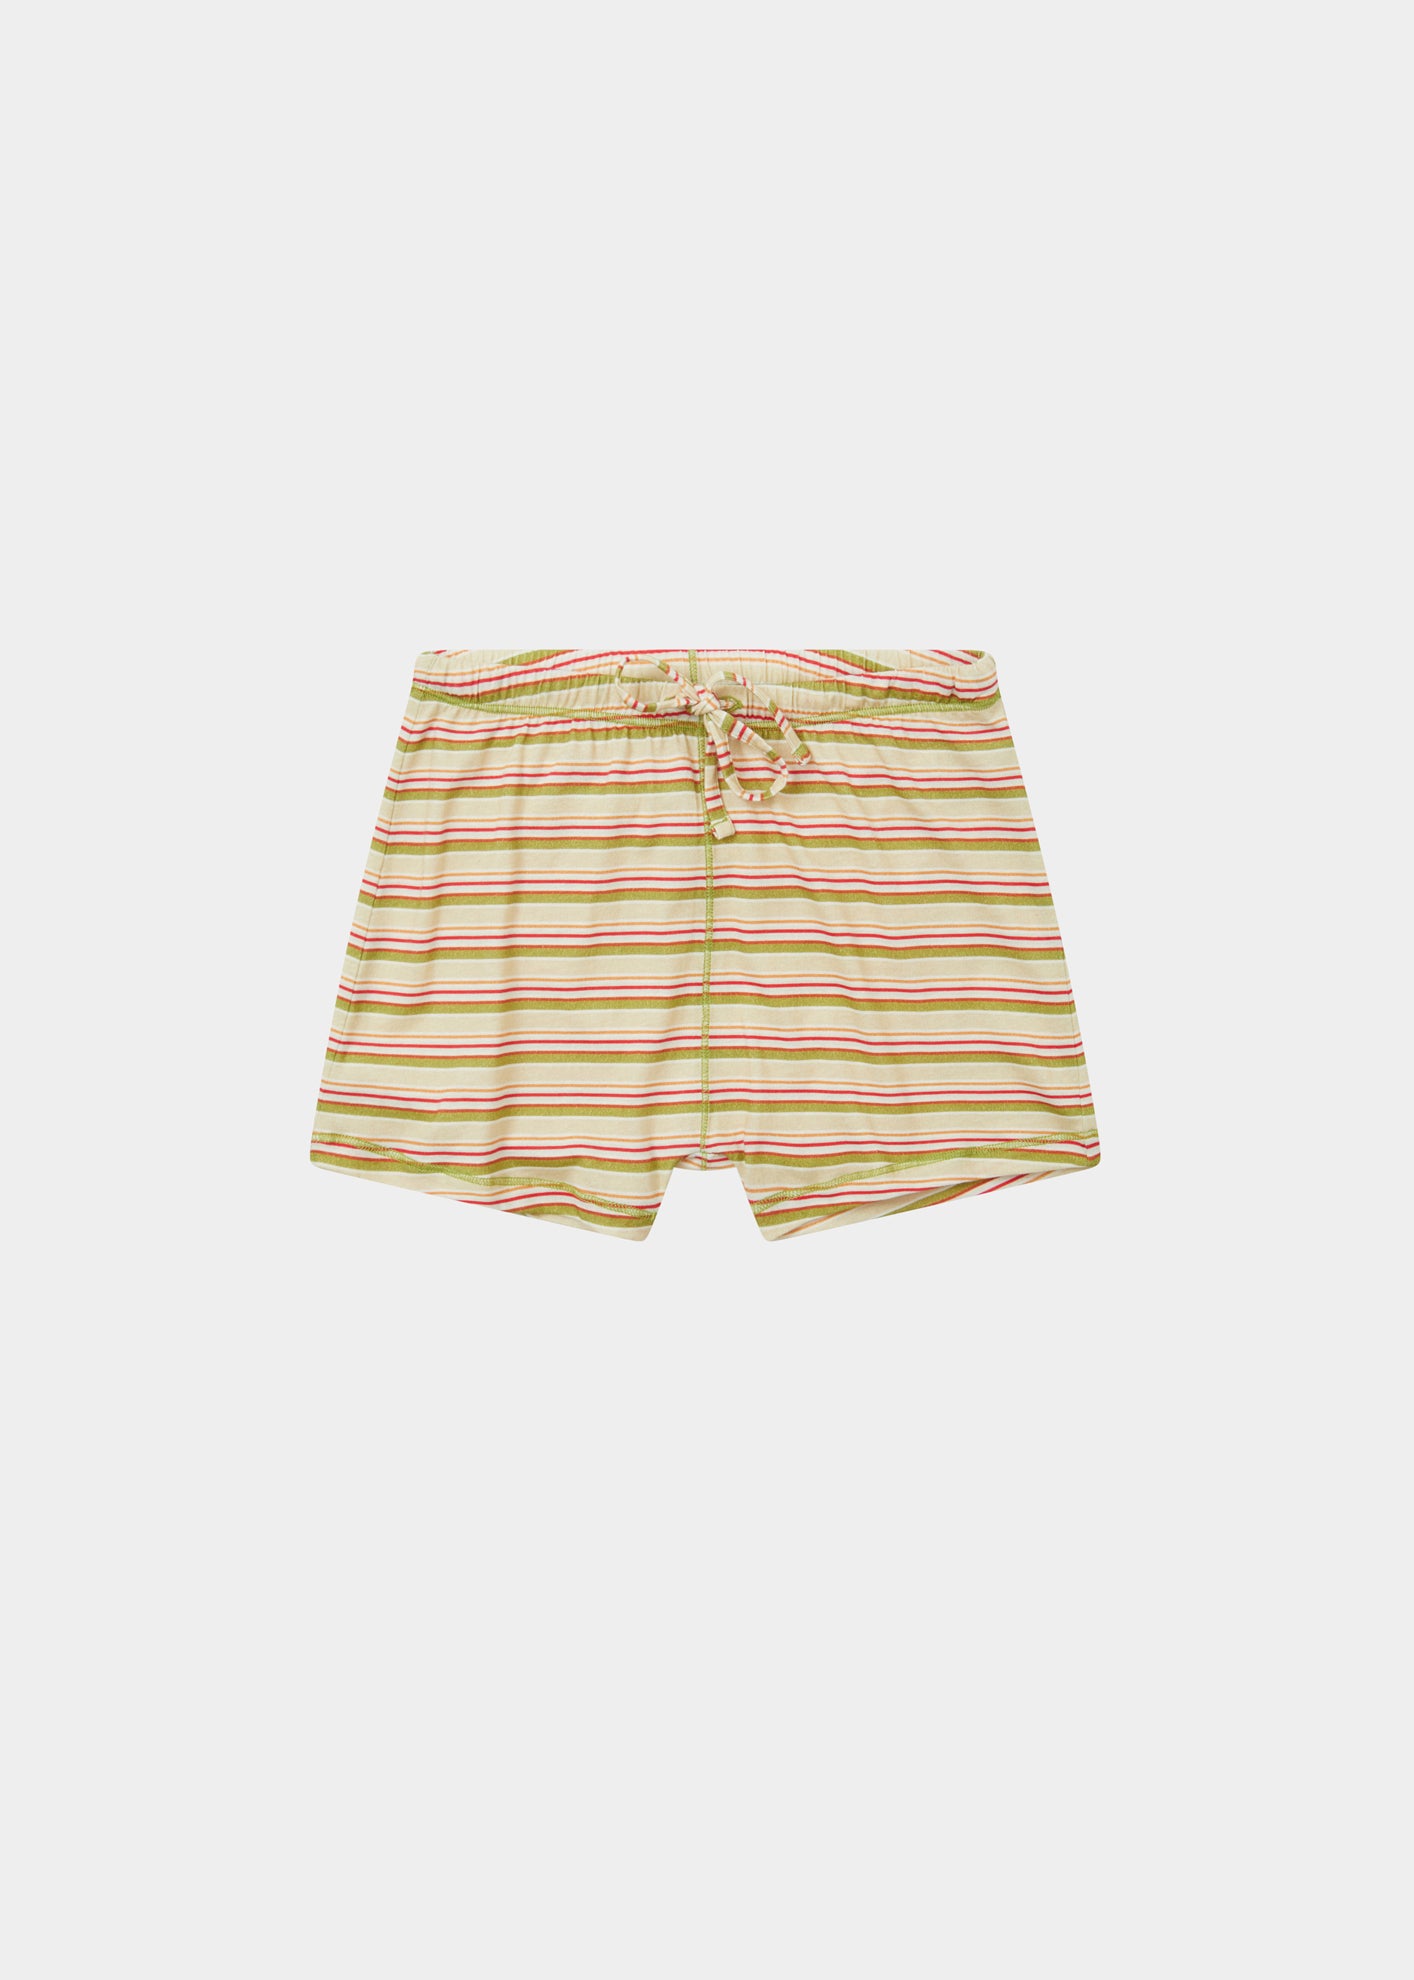 Children Designer Sportswear - Alyxia Shorts - Multi Stripe